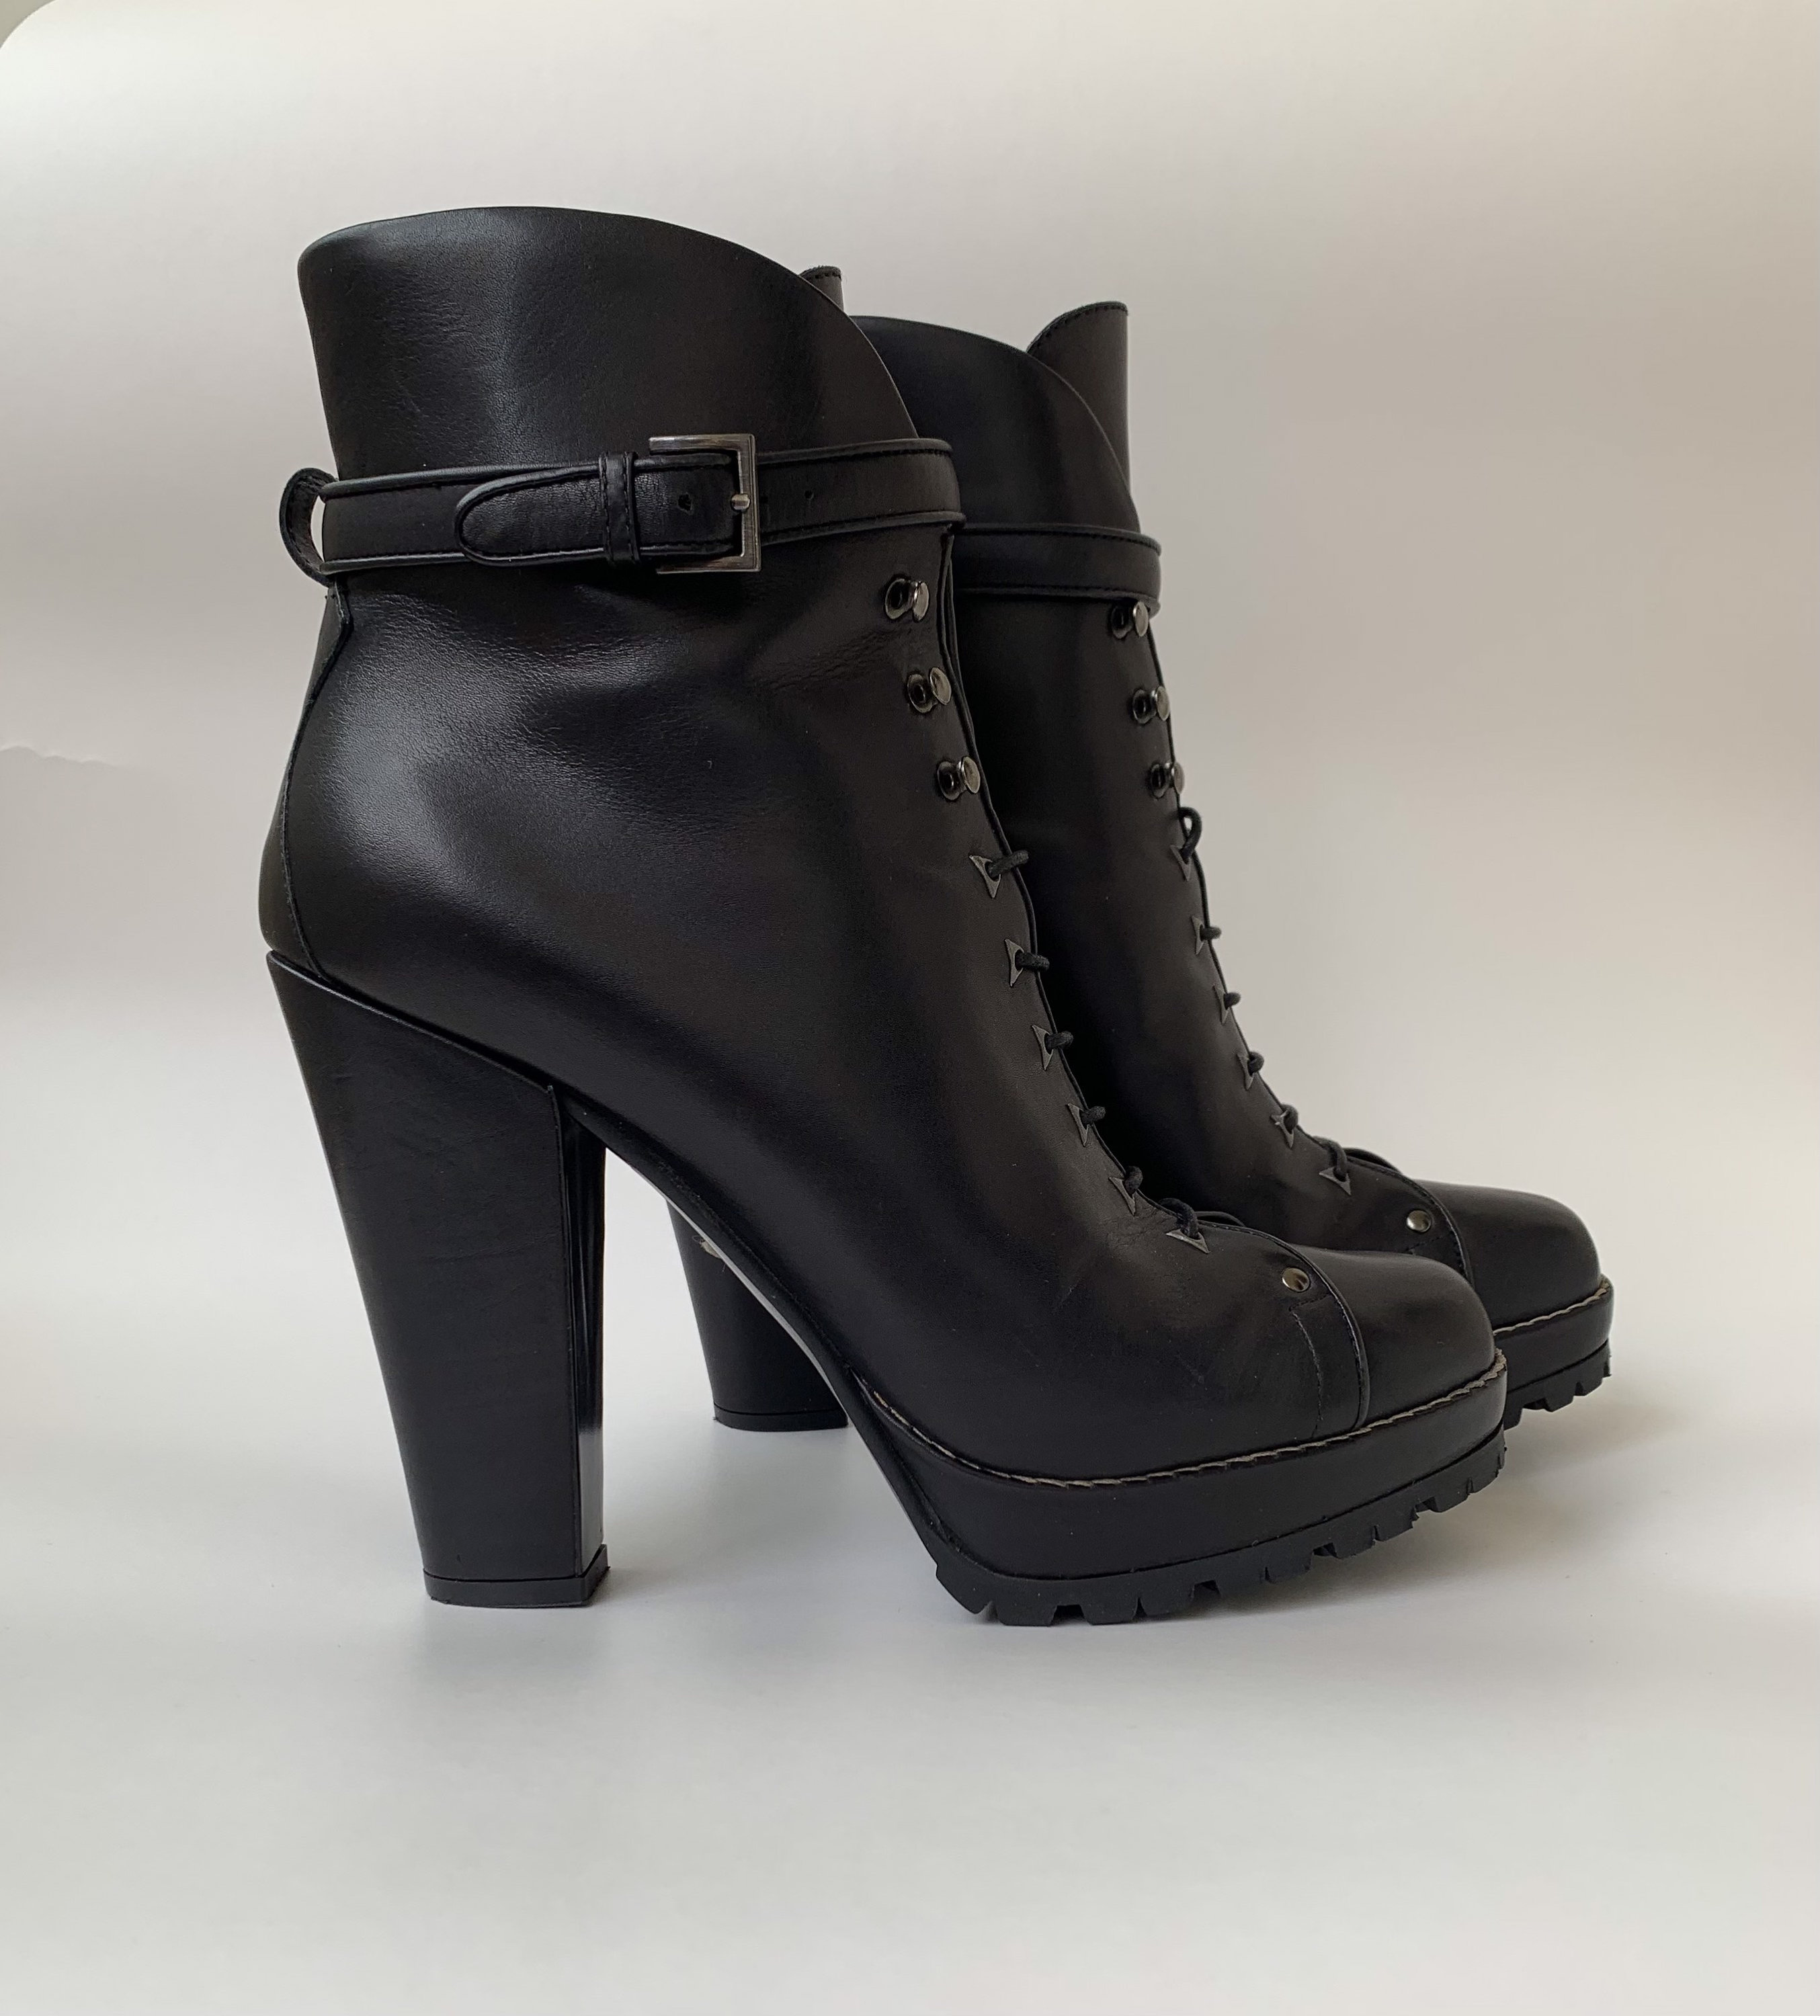 Chanel Black Leather Paris Dallas Ankle Length Boots Size 38 Chanel